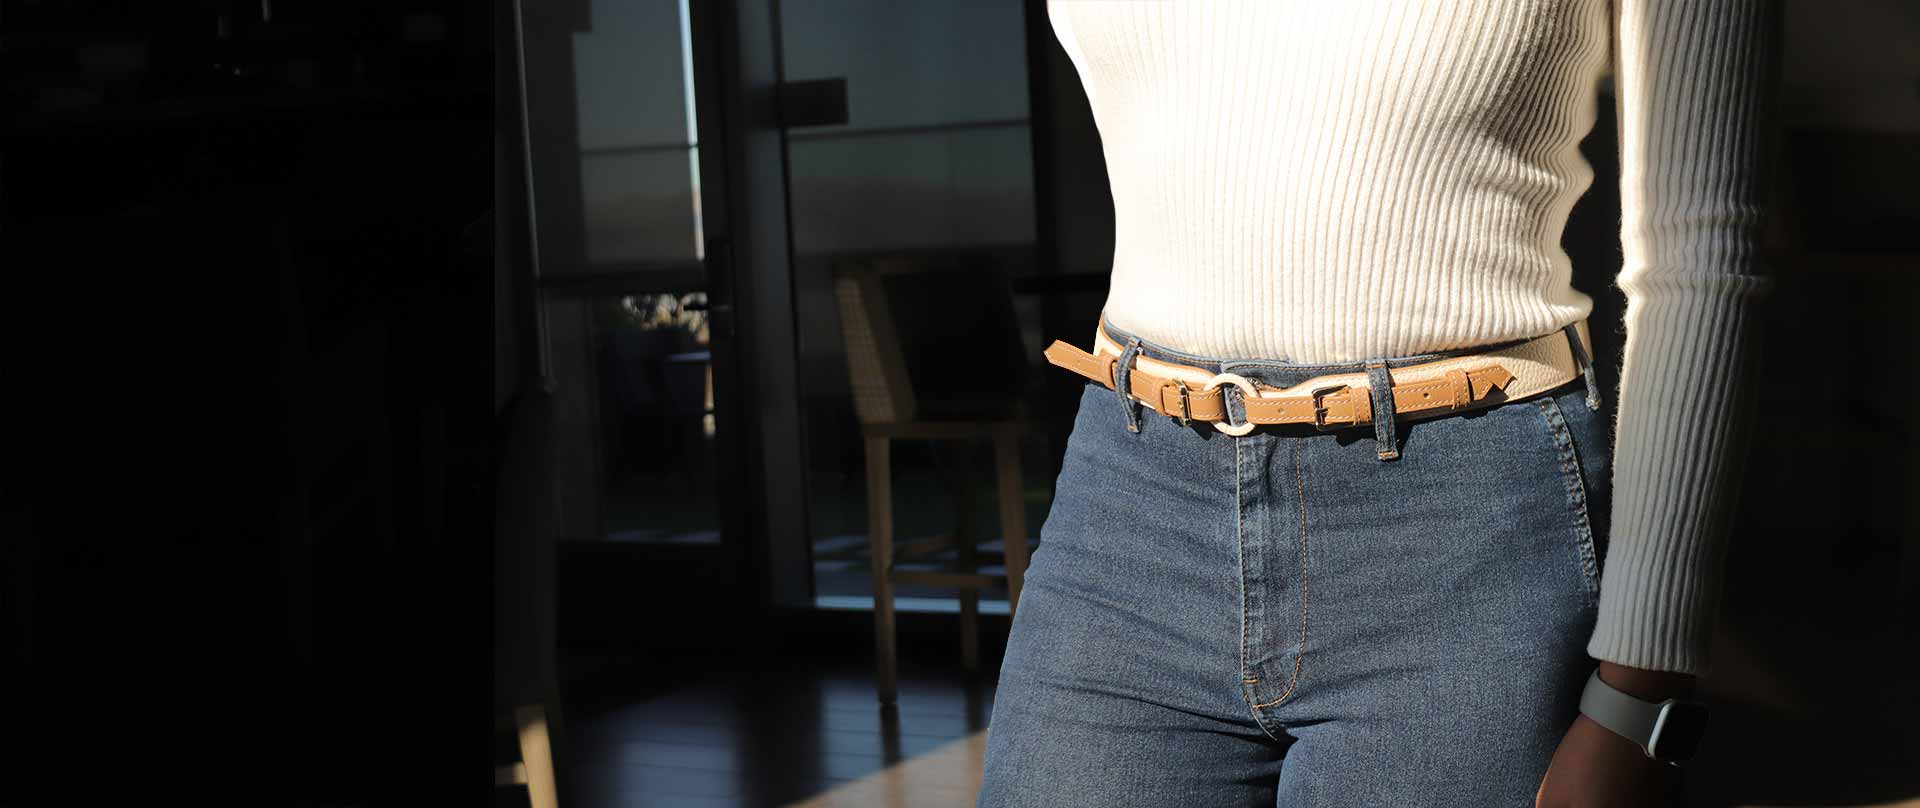 Ember Universal Belt in beige & white leather worn as a waist belt